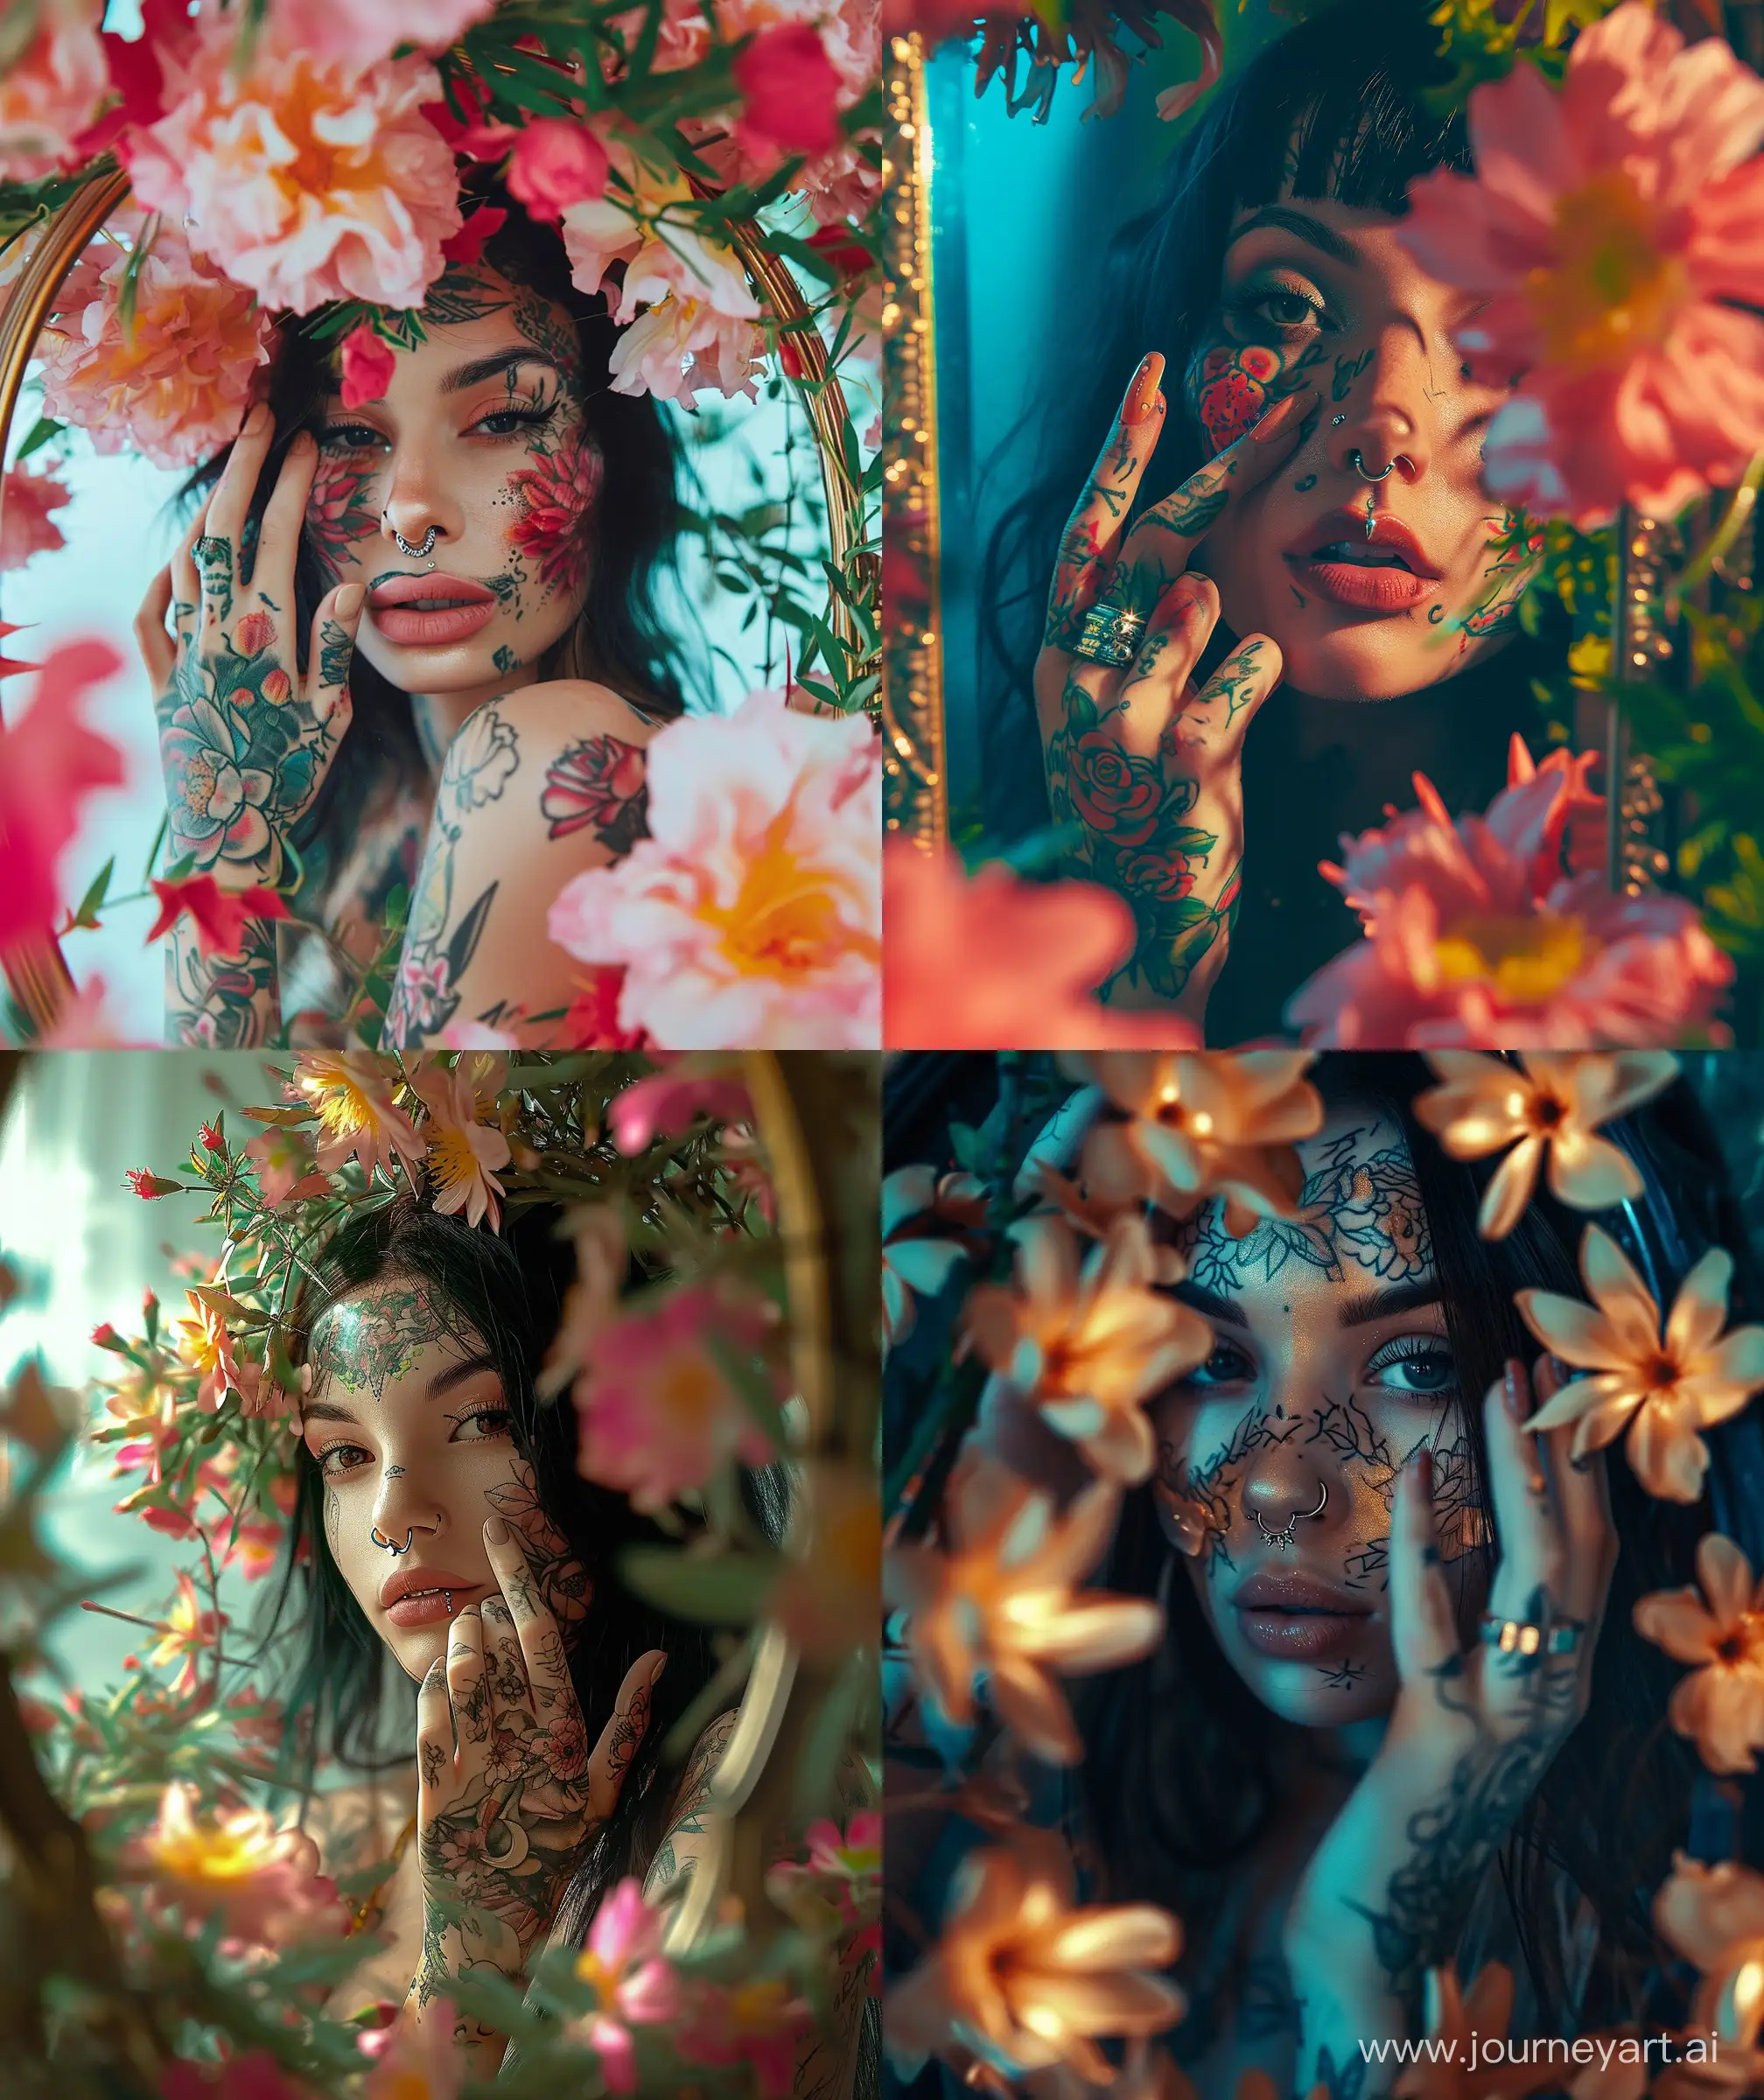 Modern-Girl-Admiring-FlowerAdorned-Reflection-with-Tattoos-and-Stylish-Attire